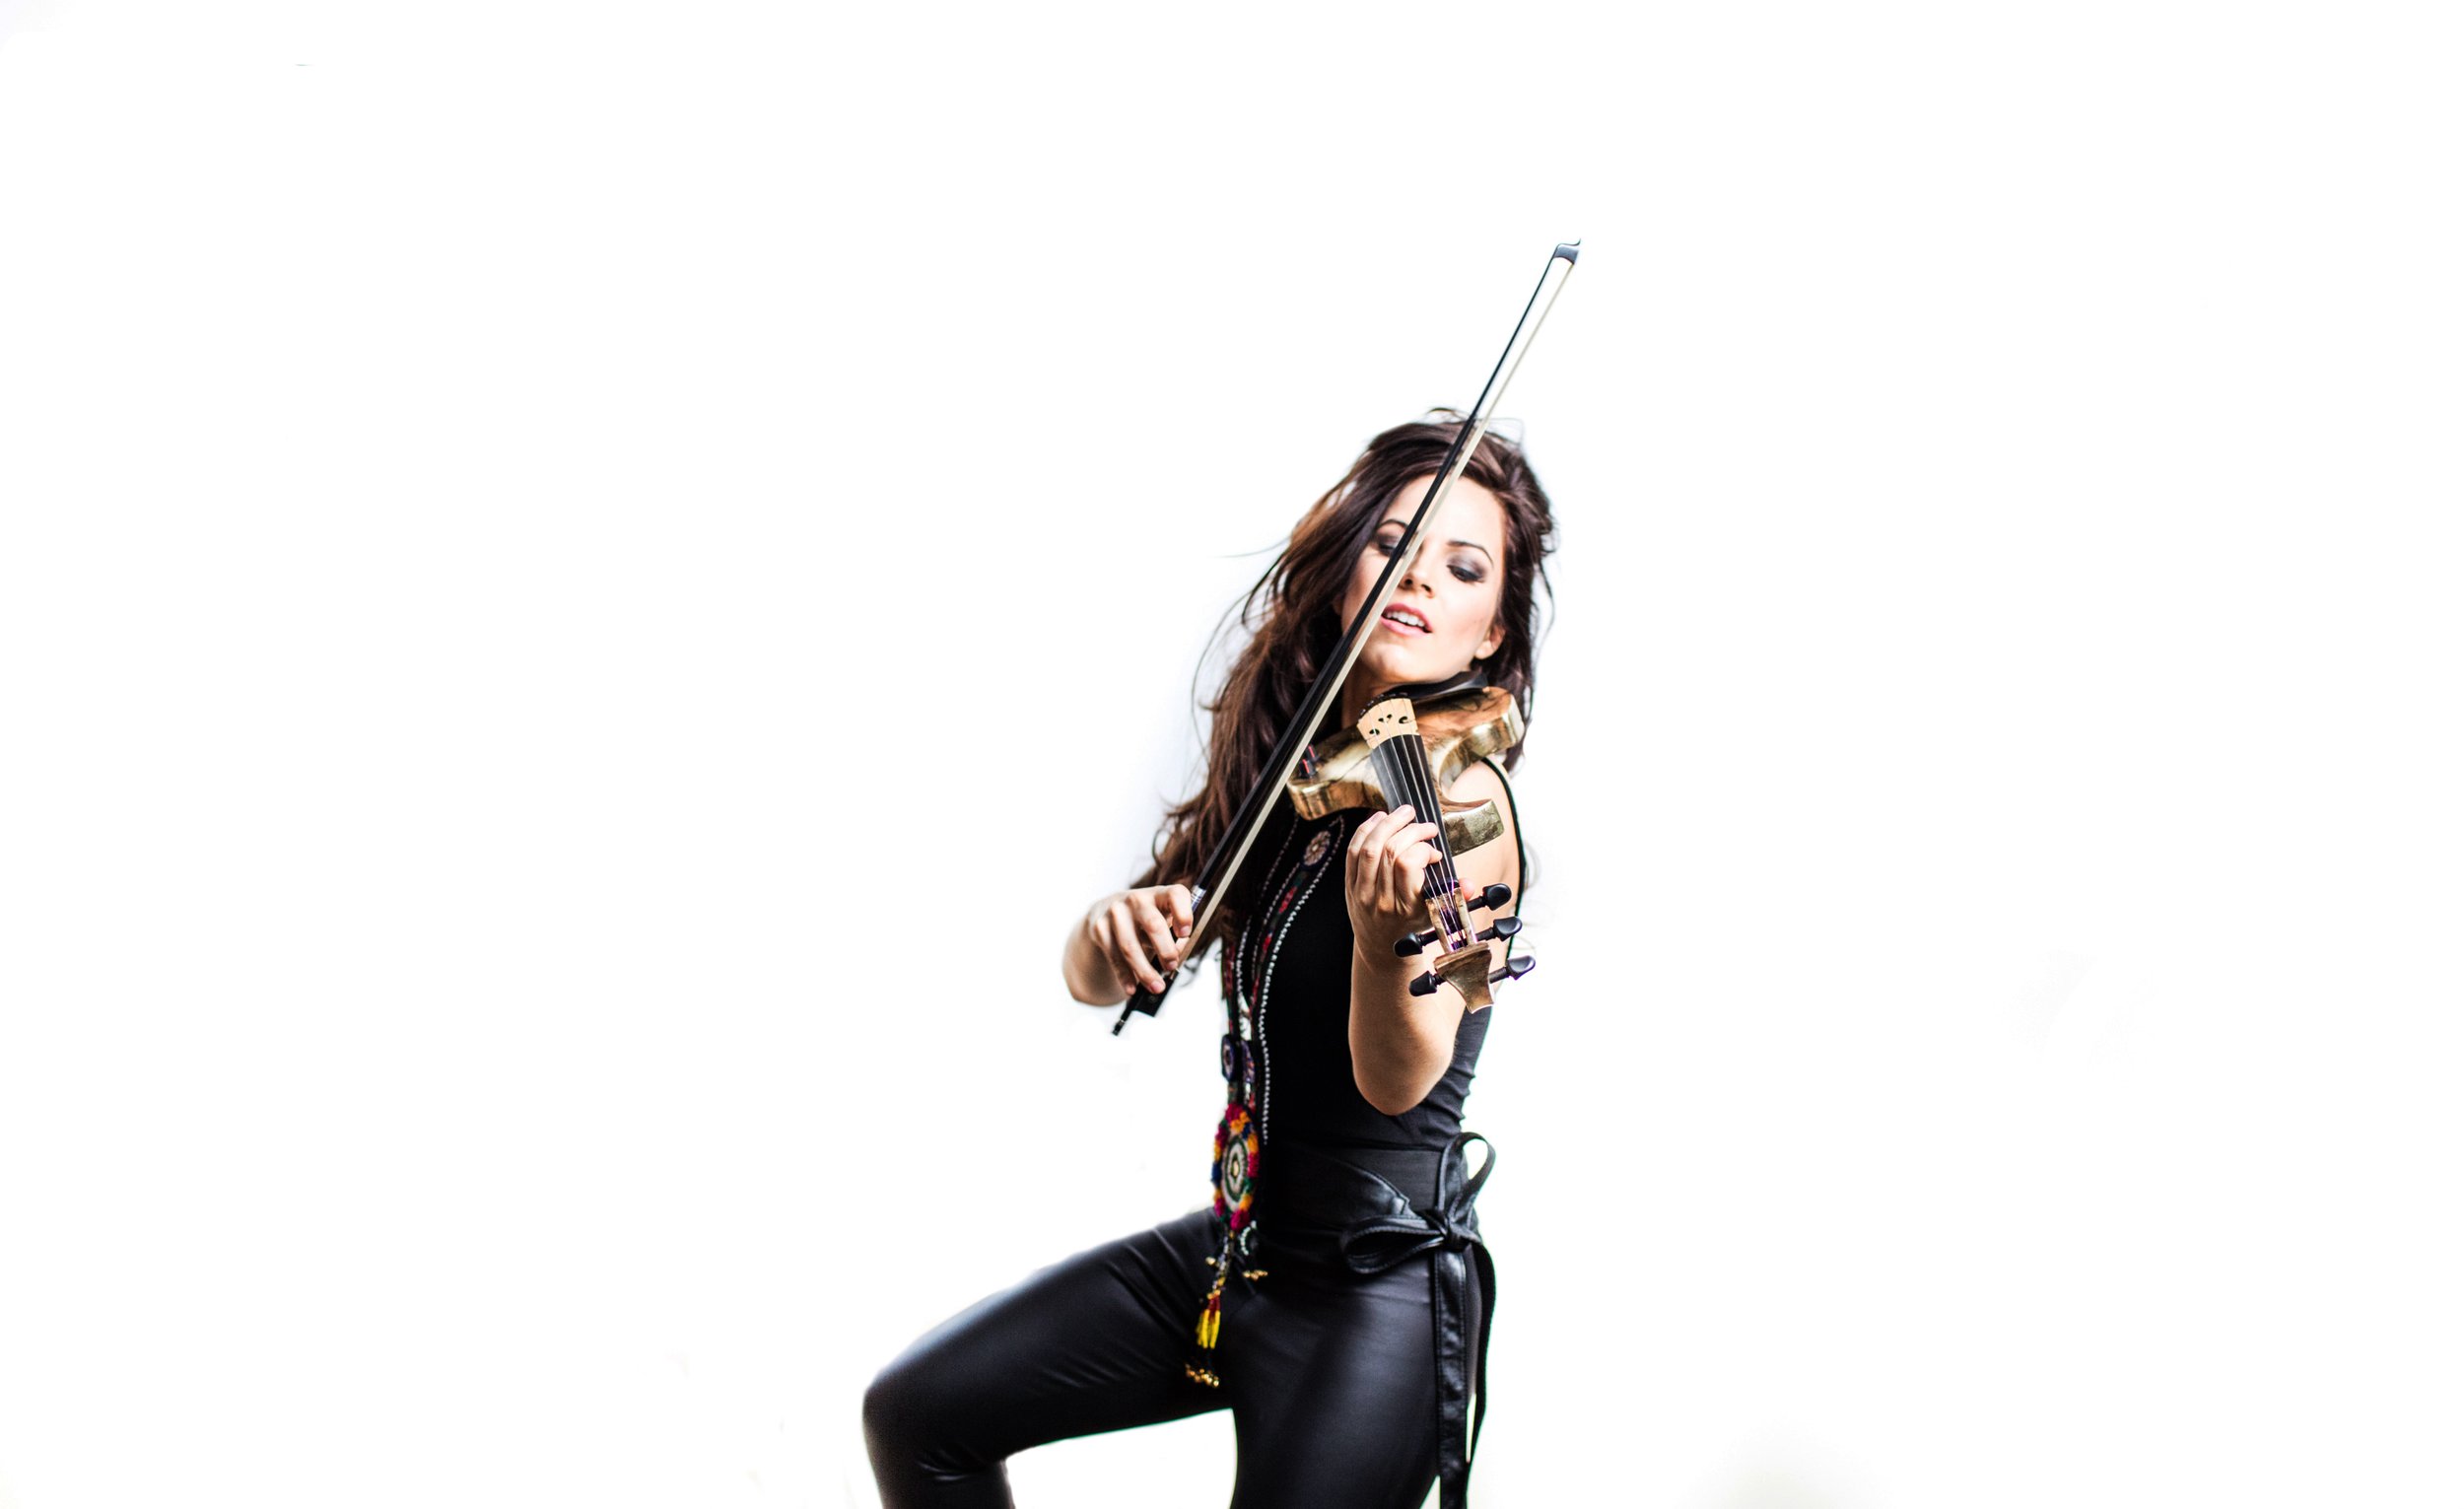 jessie_may_smart_london_berkshire_violinist.jpeg